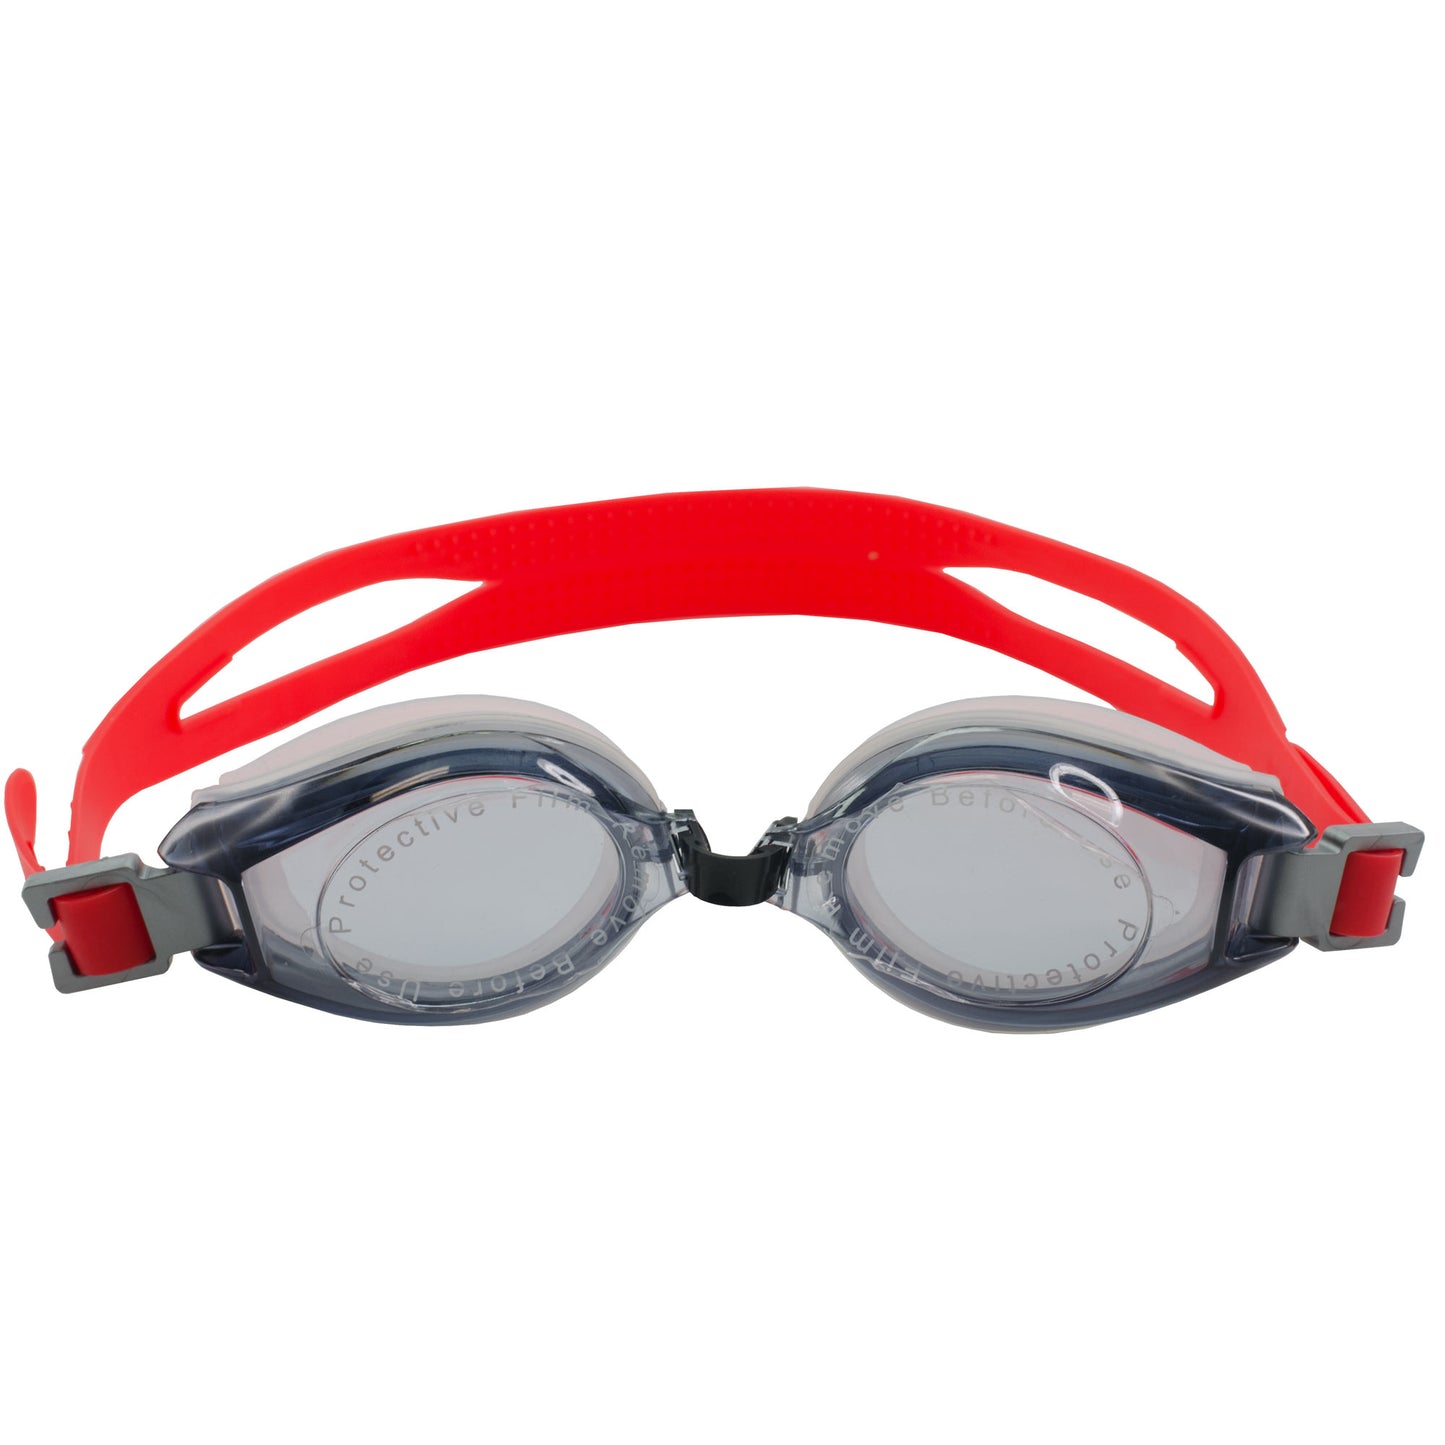 Adult Swimming Goggles with Prescription